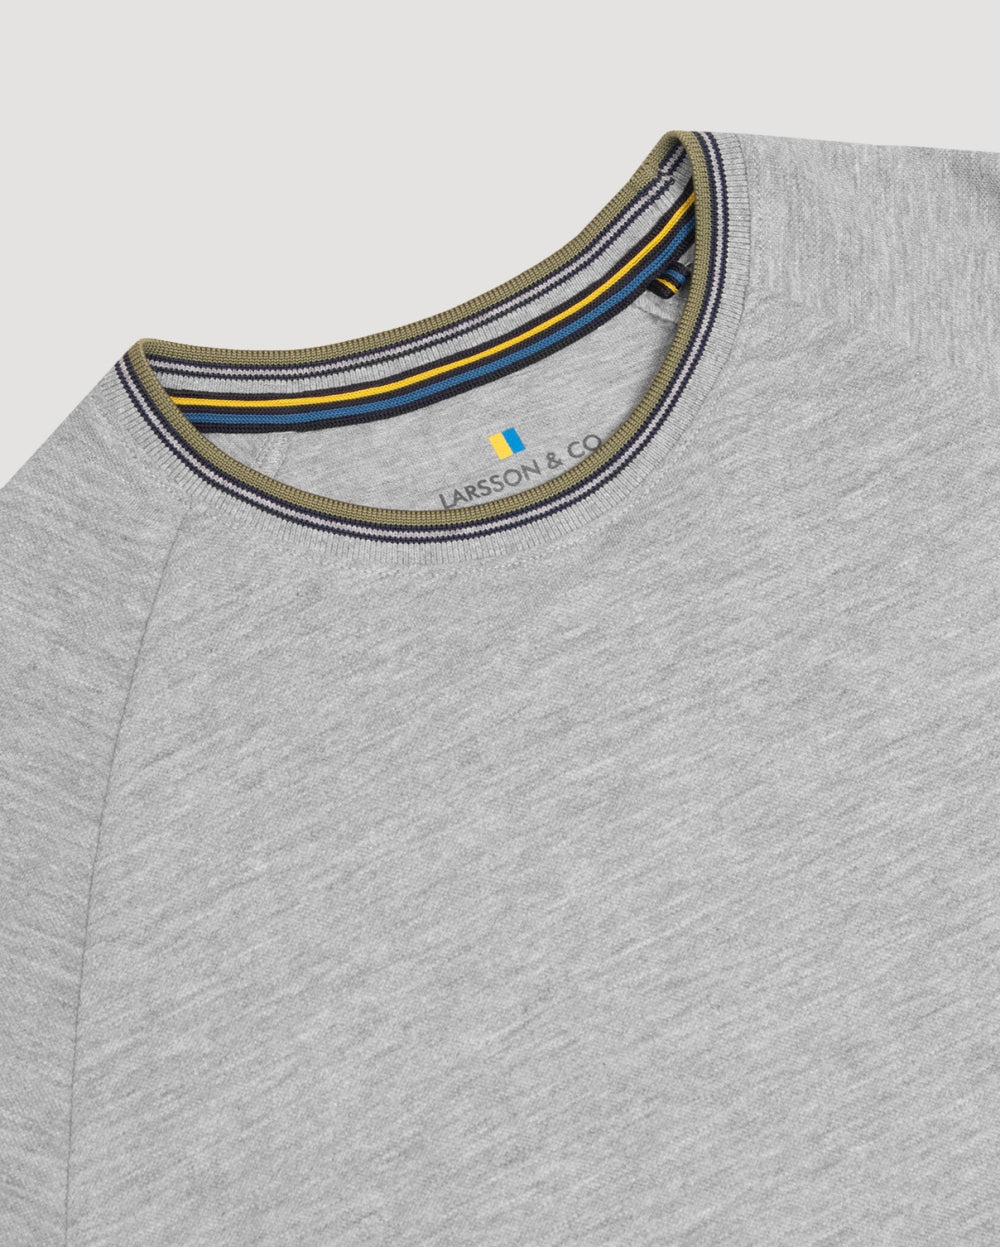 Larsson & Co Grey Melange Rib Solid Men's T-Shirt